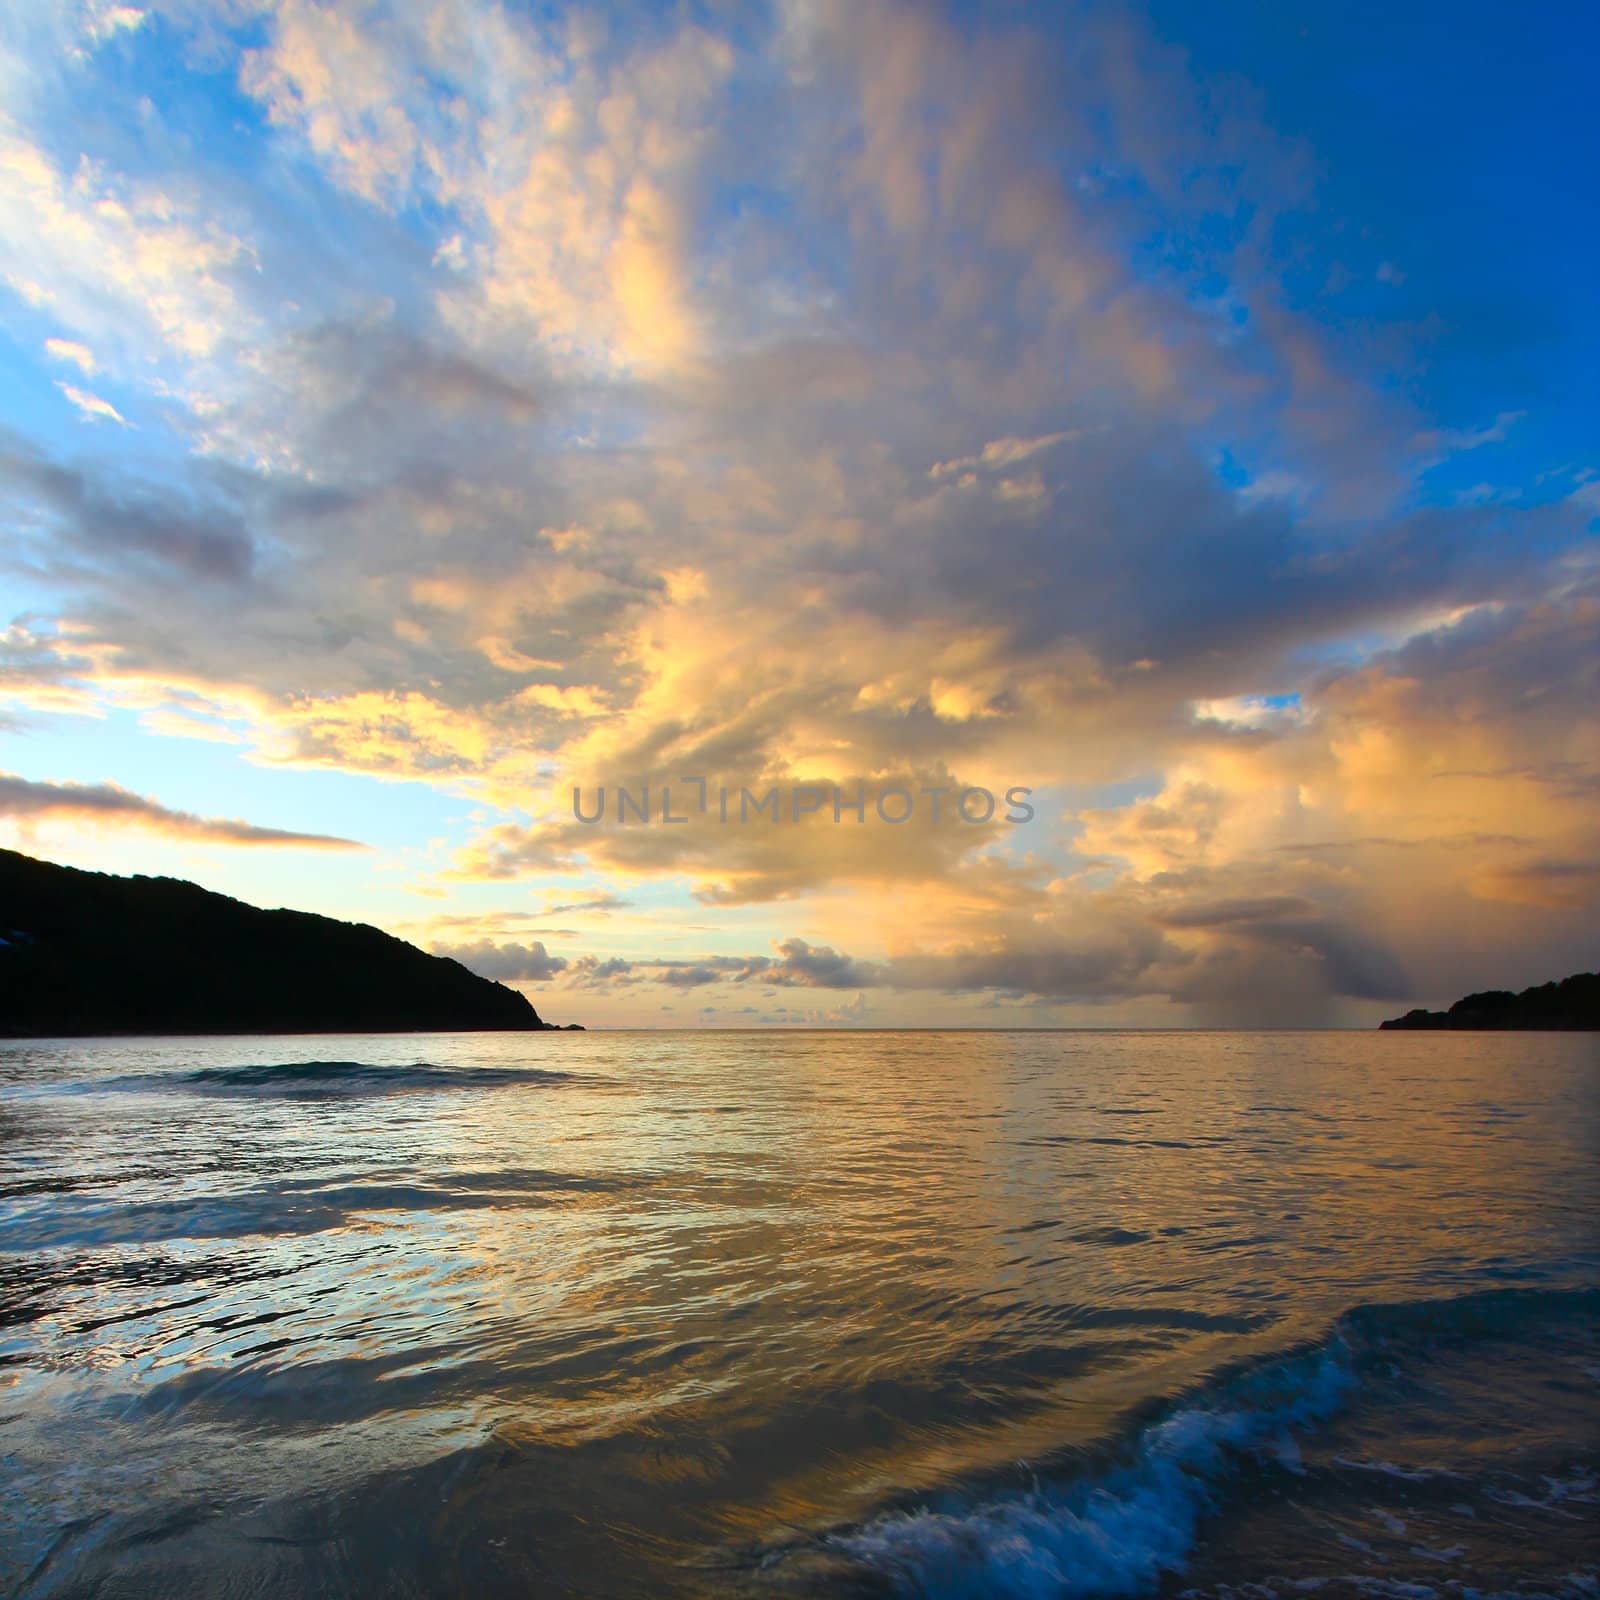 Evening sets in over Brewers Bay on Tortola - British Virgin Islands.